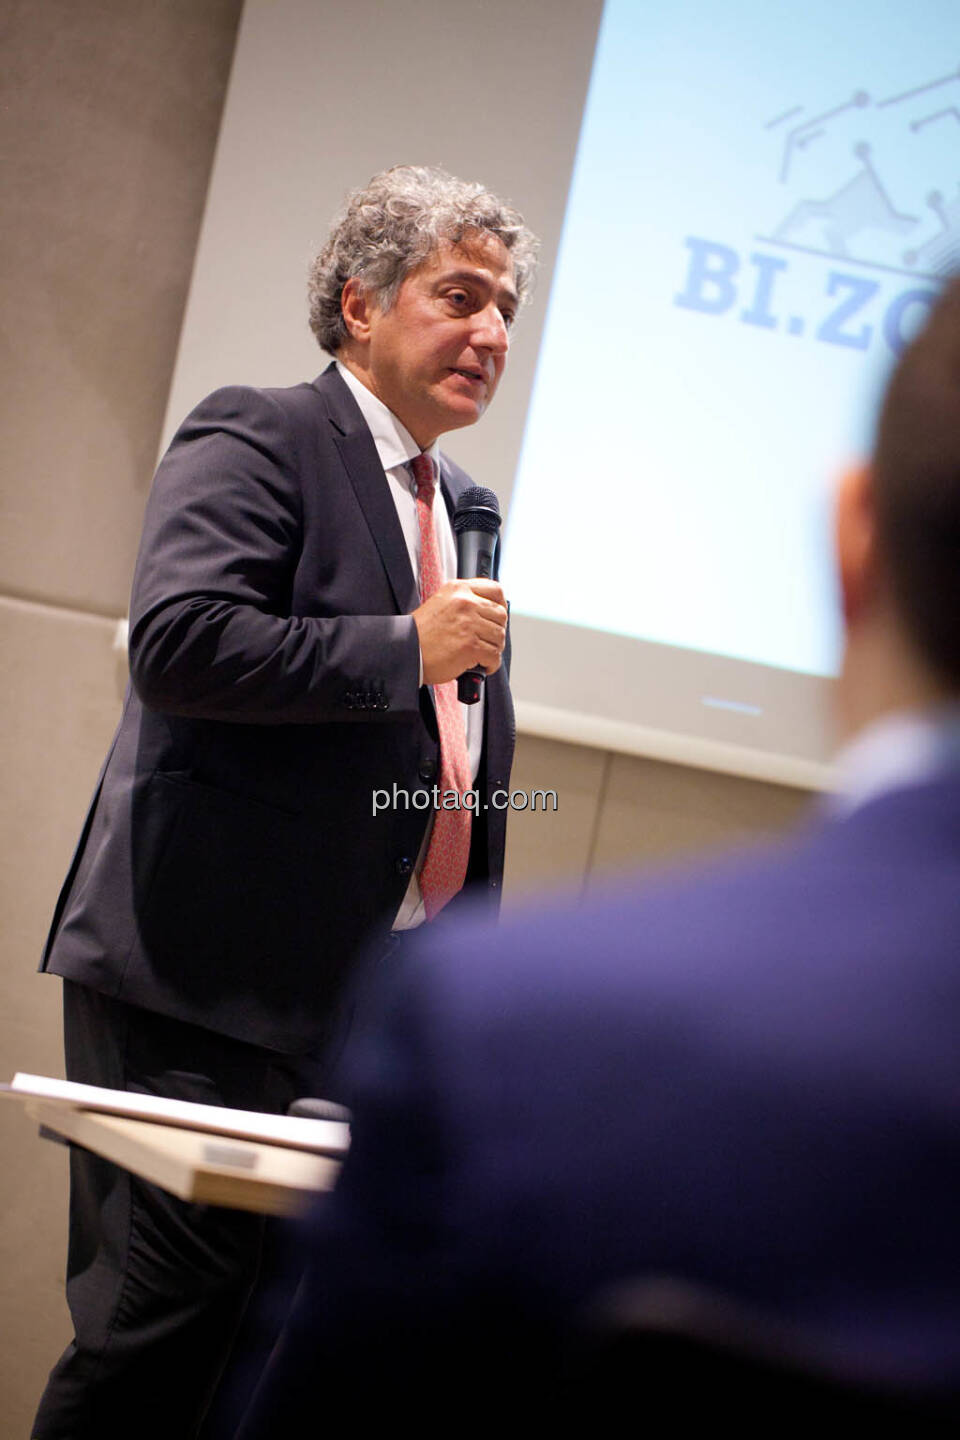 Angelo Rizzuti, Head of Transaction Banking and Trade Finance Sberbank Europe AG (Fotocredit: Michaela Mejta for photaq.com)